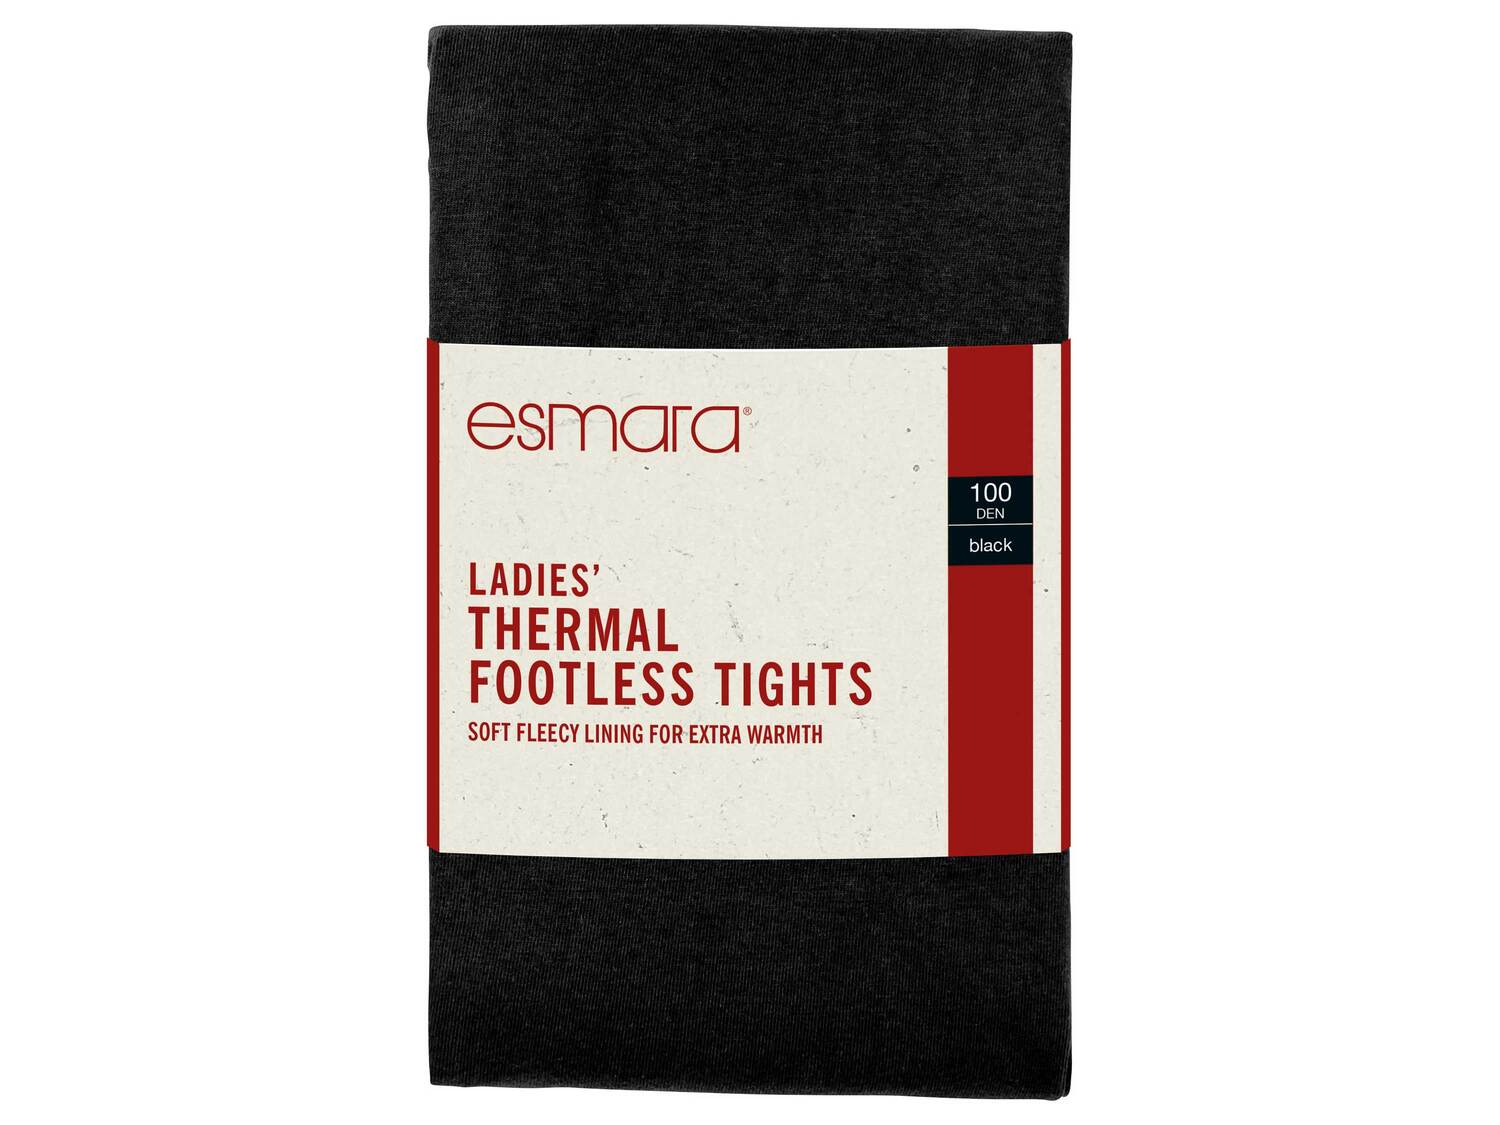 Termiczne rajstopy lub legginsy 100 DEN Esmara, cena 15,99 PLN 
3 wzory 
- rozmiary: ...